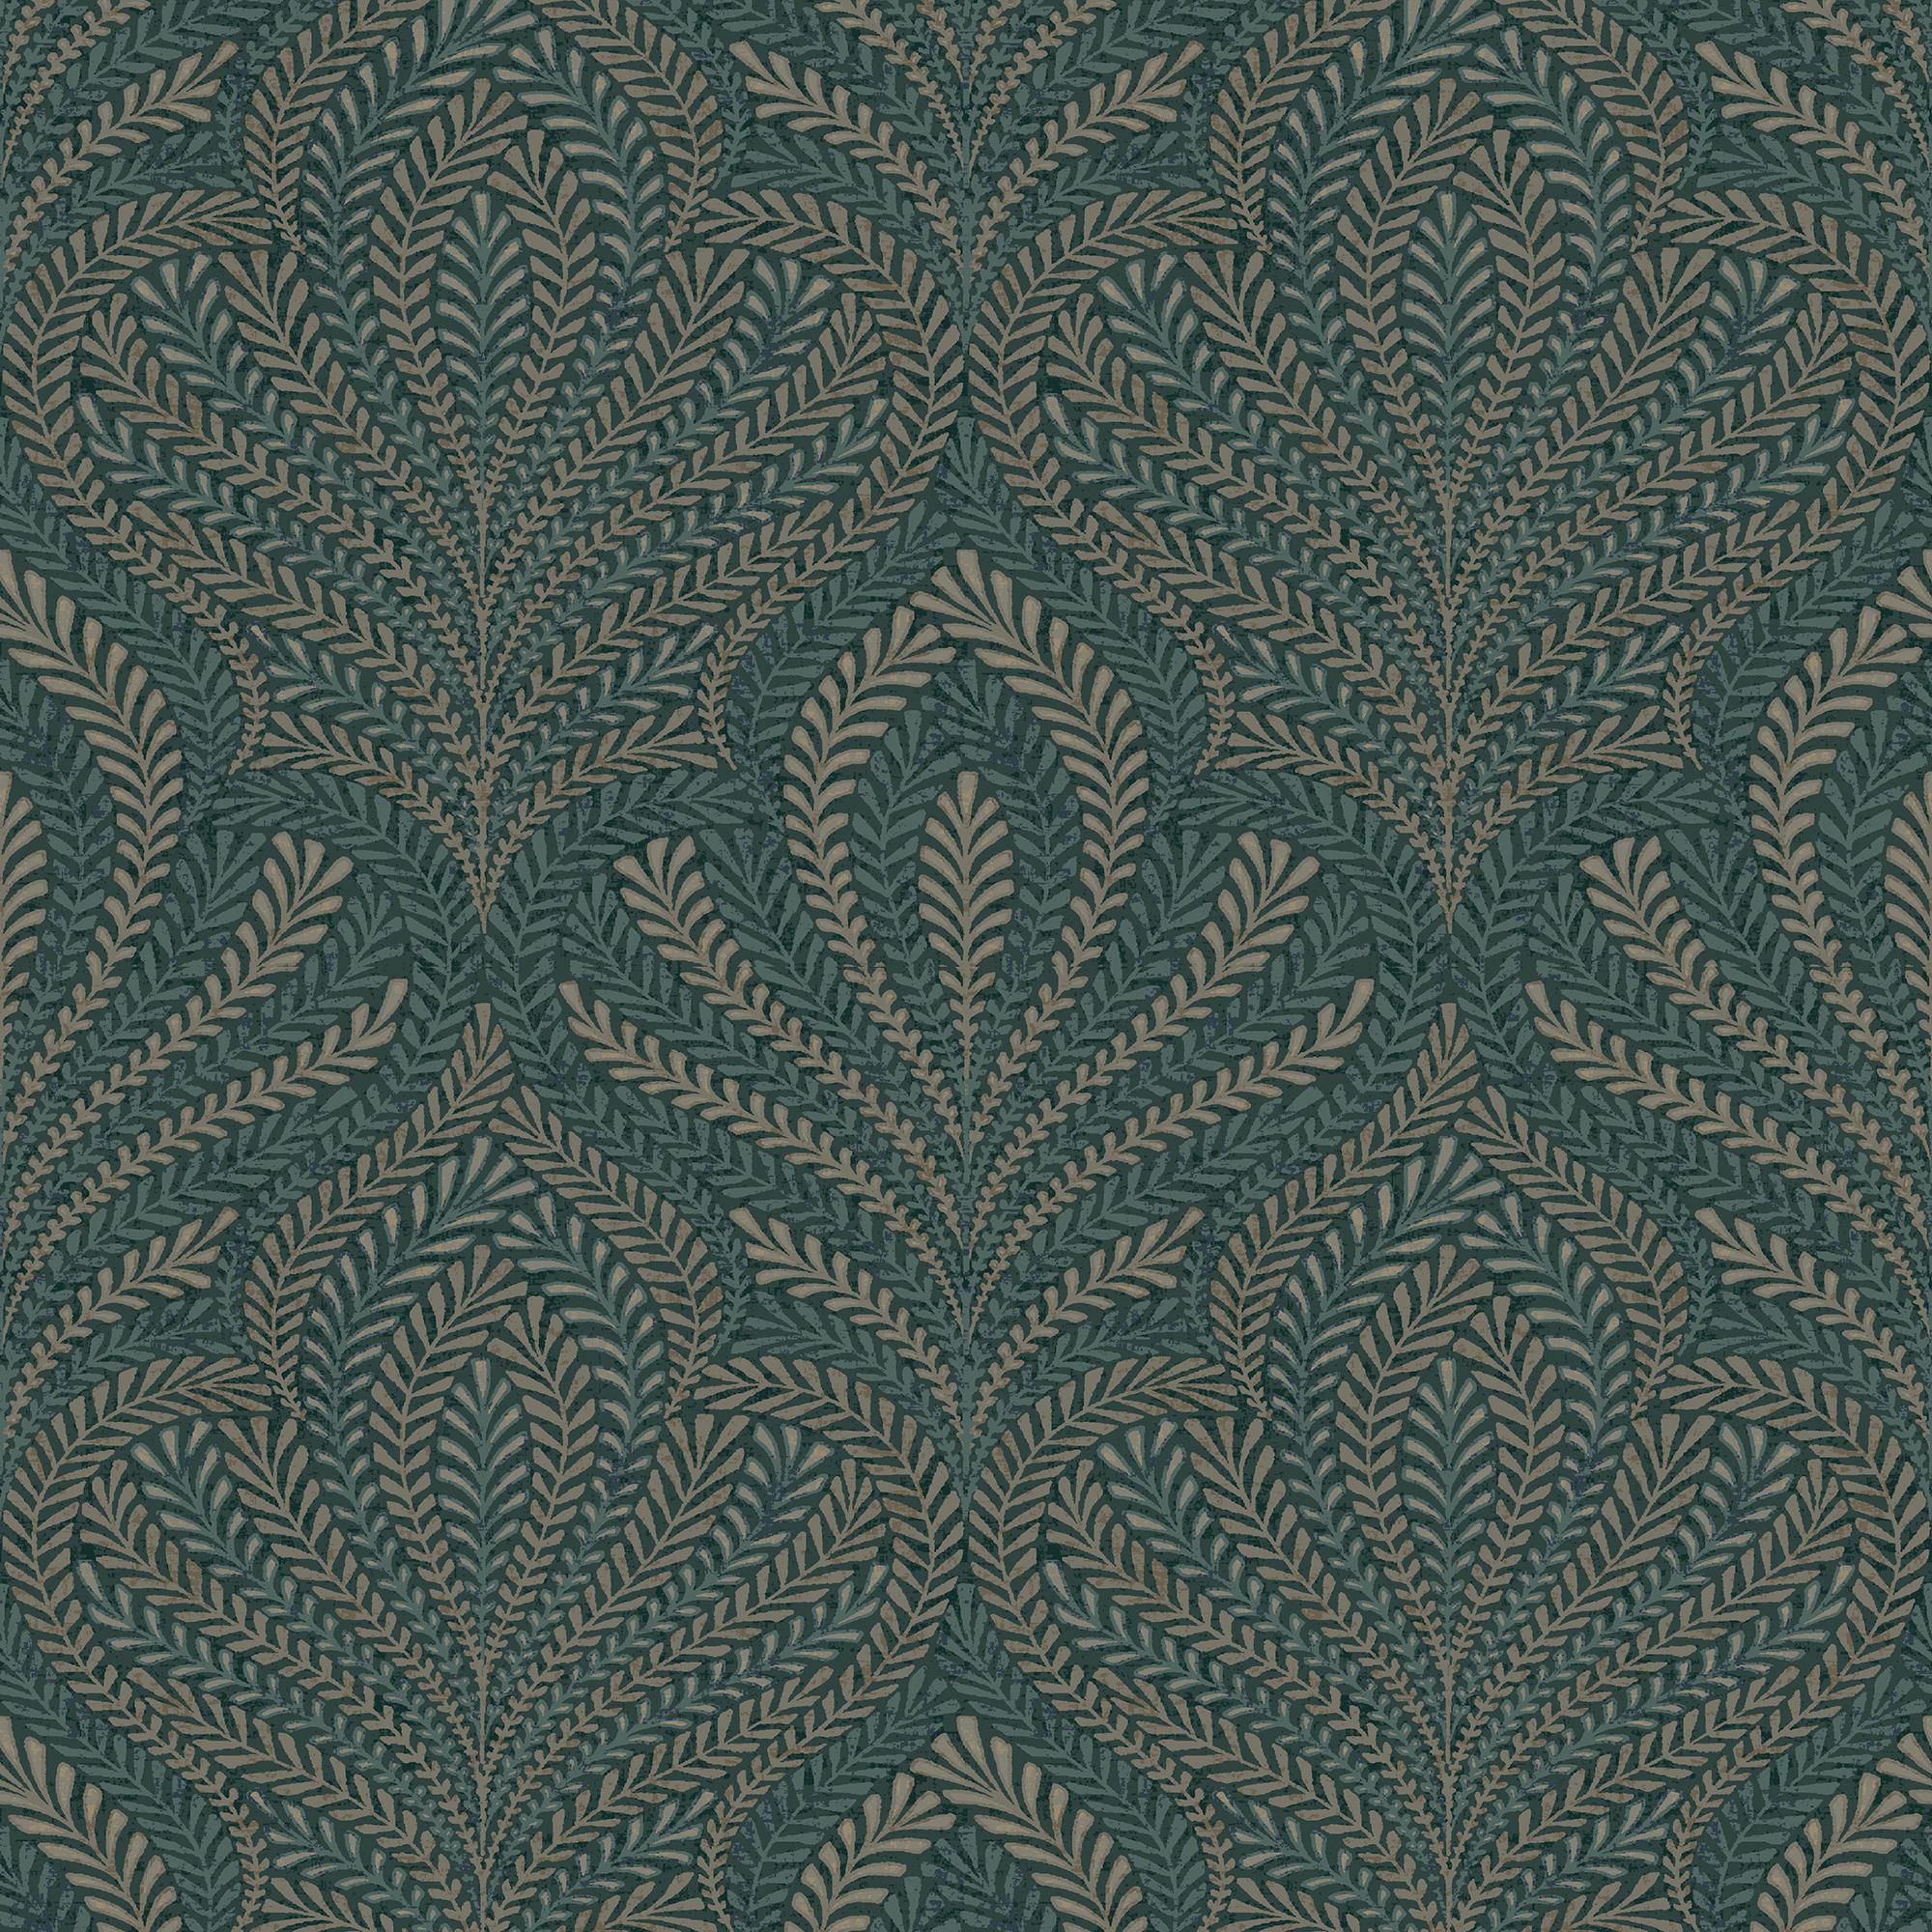 GoodHome Danbu Dark teal Ornamental Metallic effect Textured Wallpaper Sample